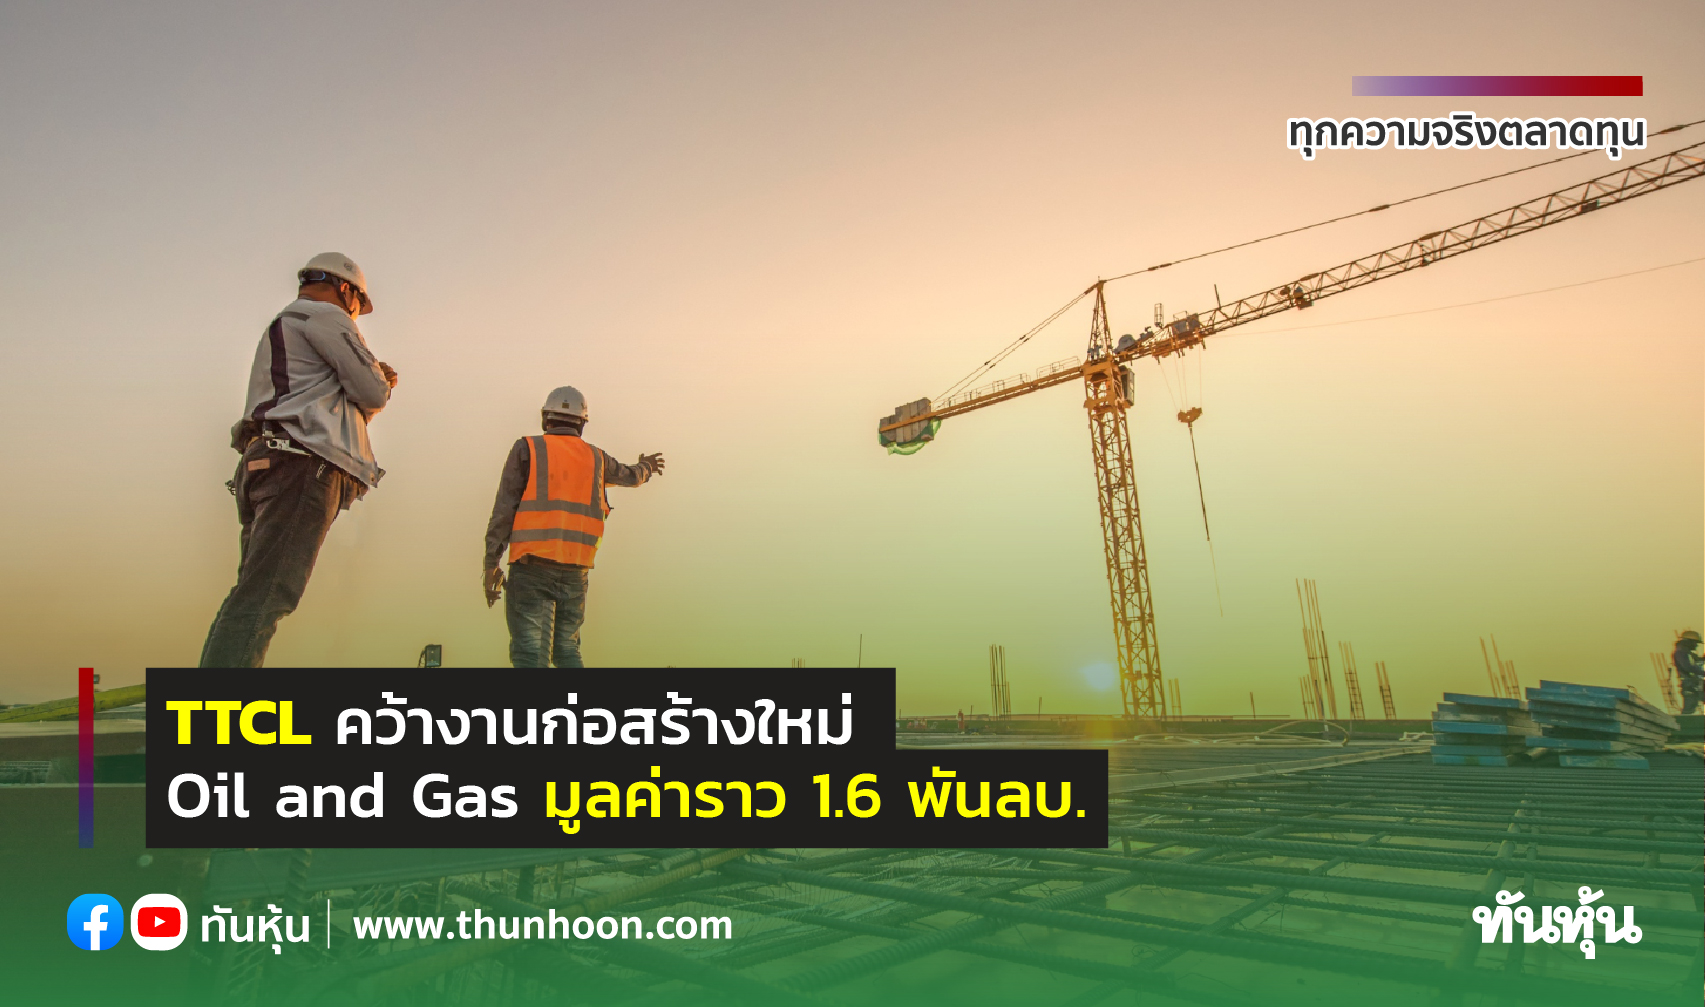 TTCL คว้างานก่อสร้างใหม่ Oil and Gas มูลค่าราว 1.6 พันลบ.